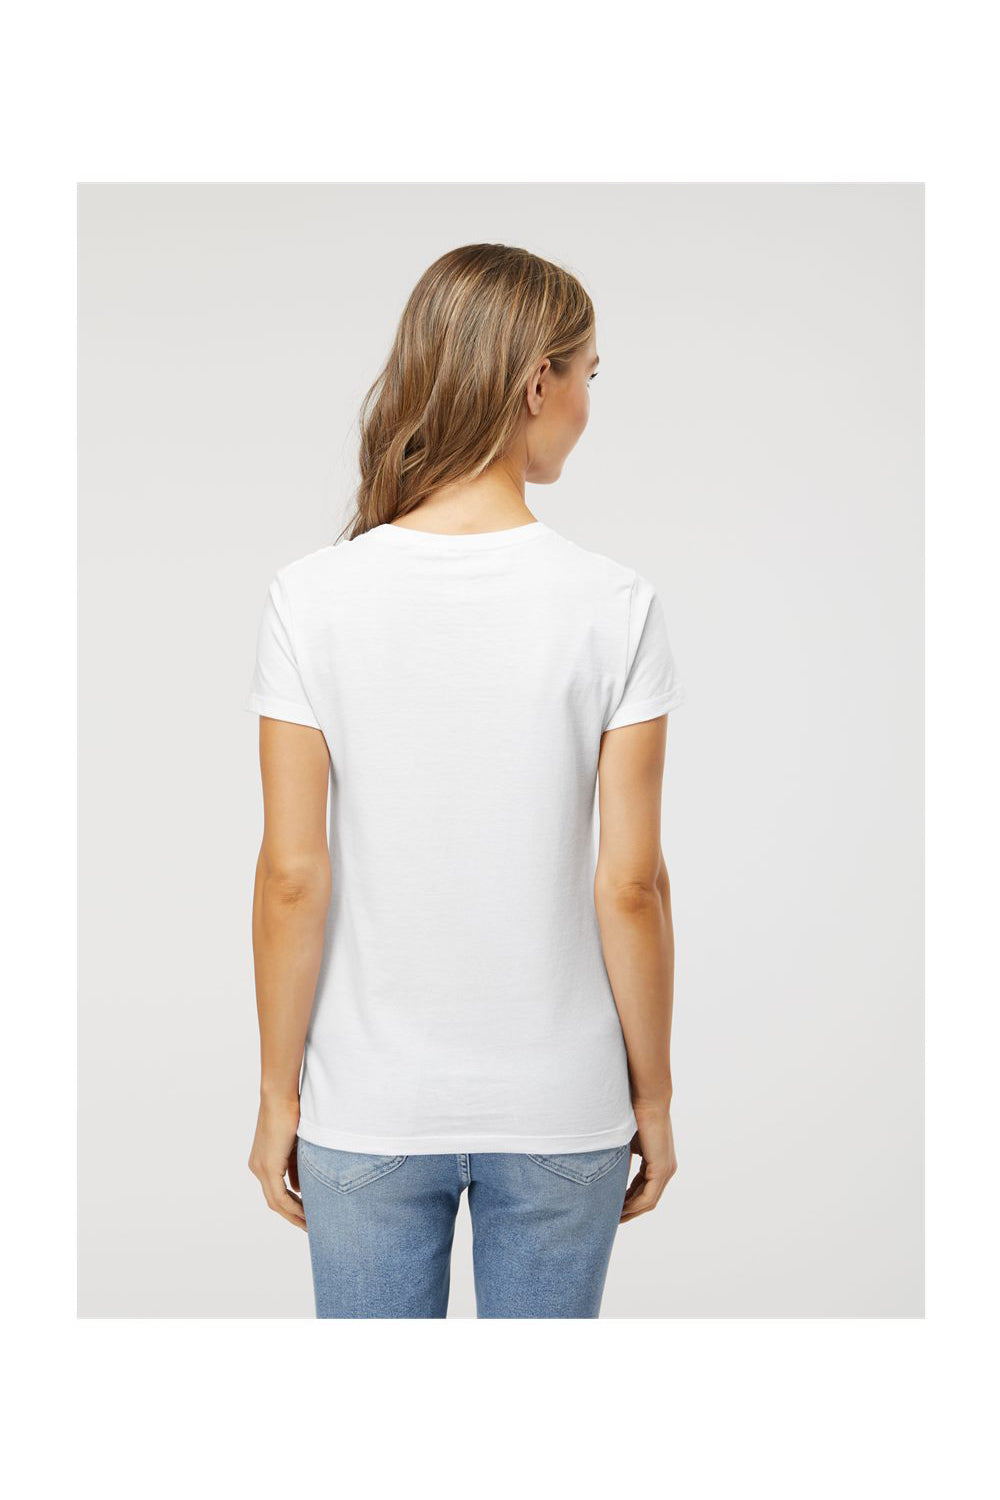 M&O 4810 Womens Gold Soft Touch Short Sleeve Crewneck T-Shirt White Model Back